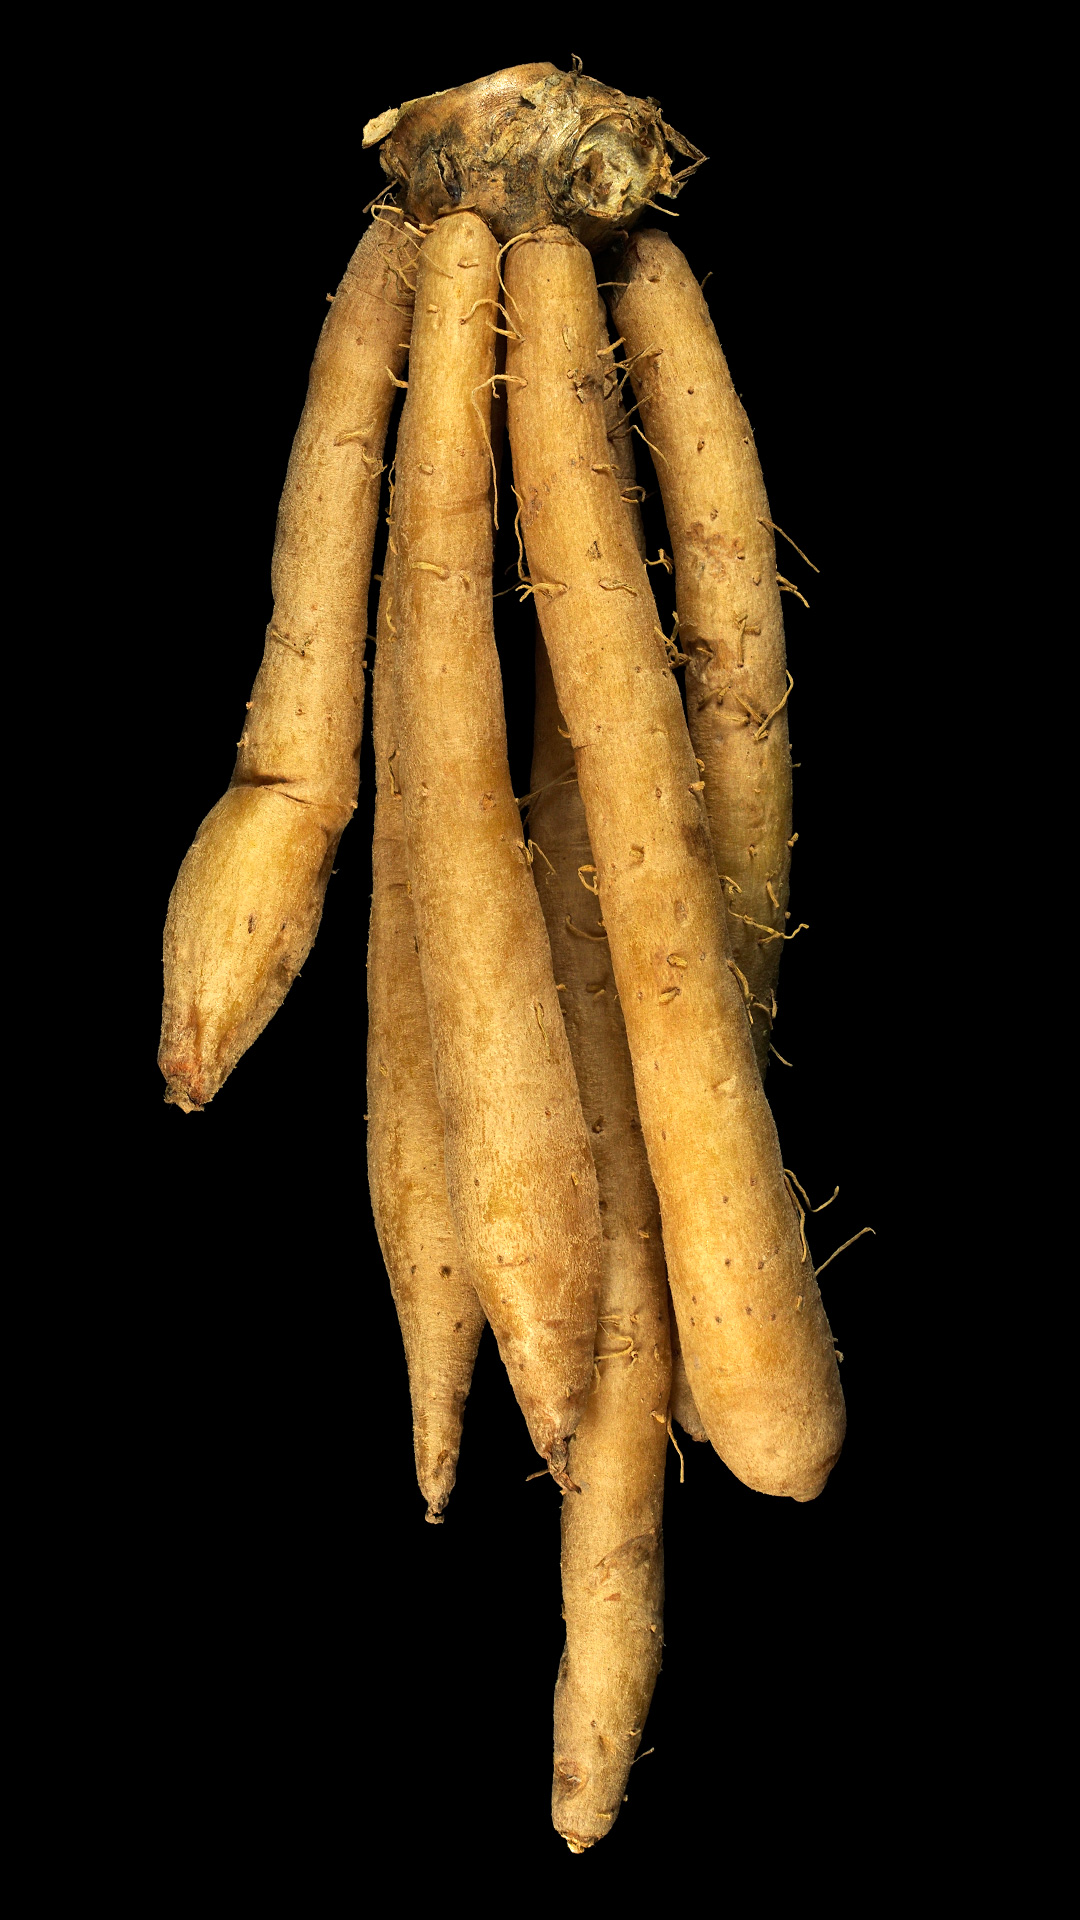 Die Fingerwurz: Boesenbergia rotunda